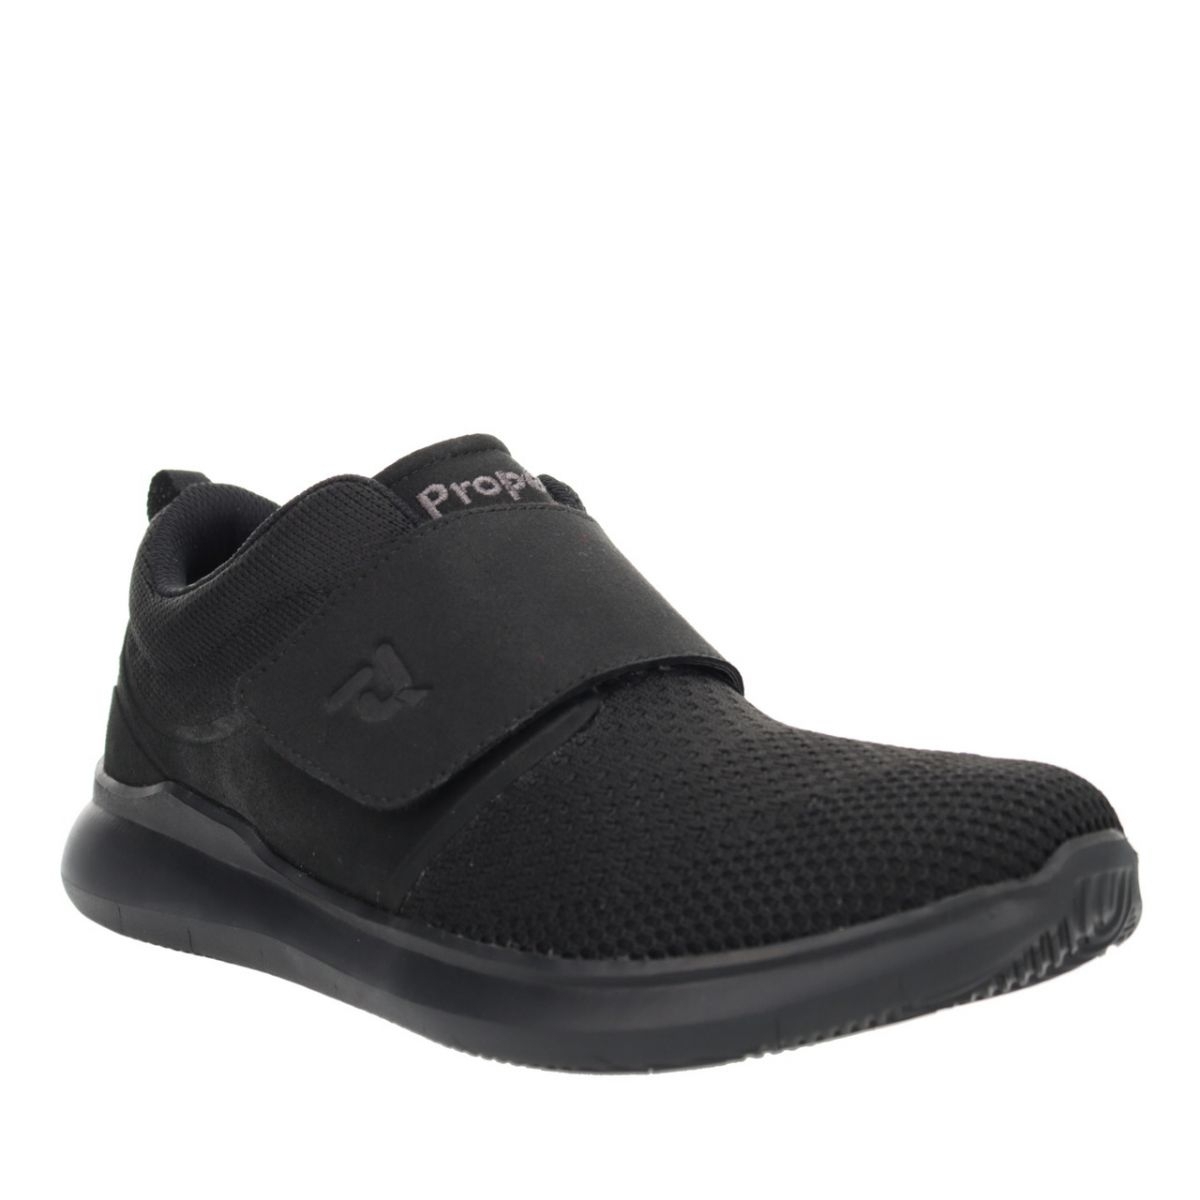 Propet Men's Viator Strap Walking Shoe All Black - MAA073MABL ALL BLACK - ALL BLACK, 10.5 X-Wide